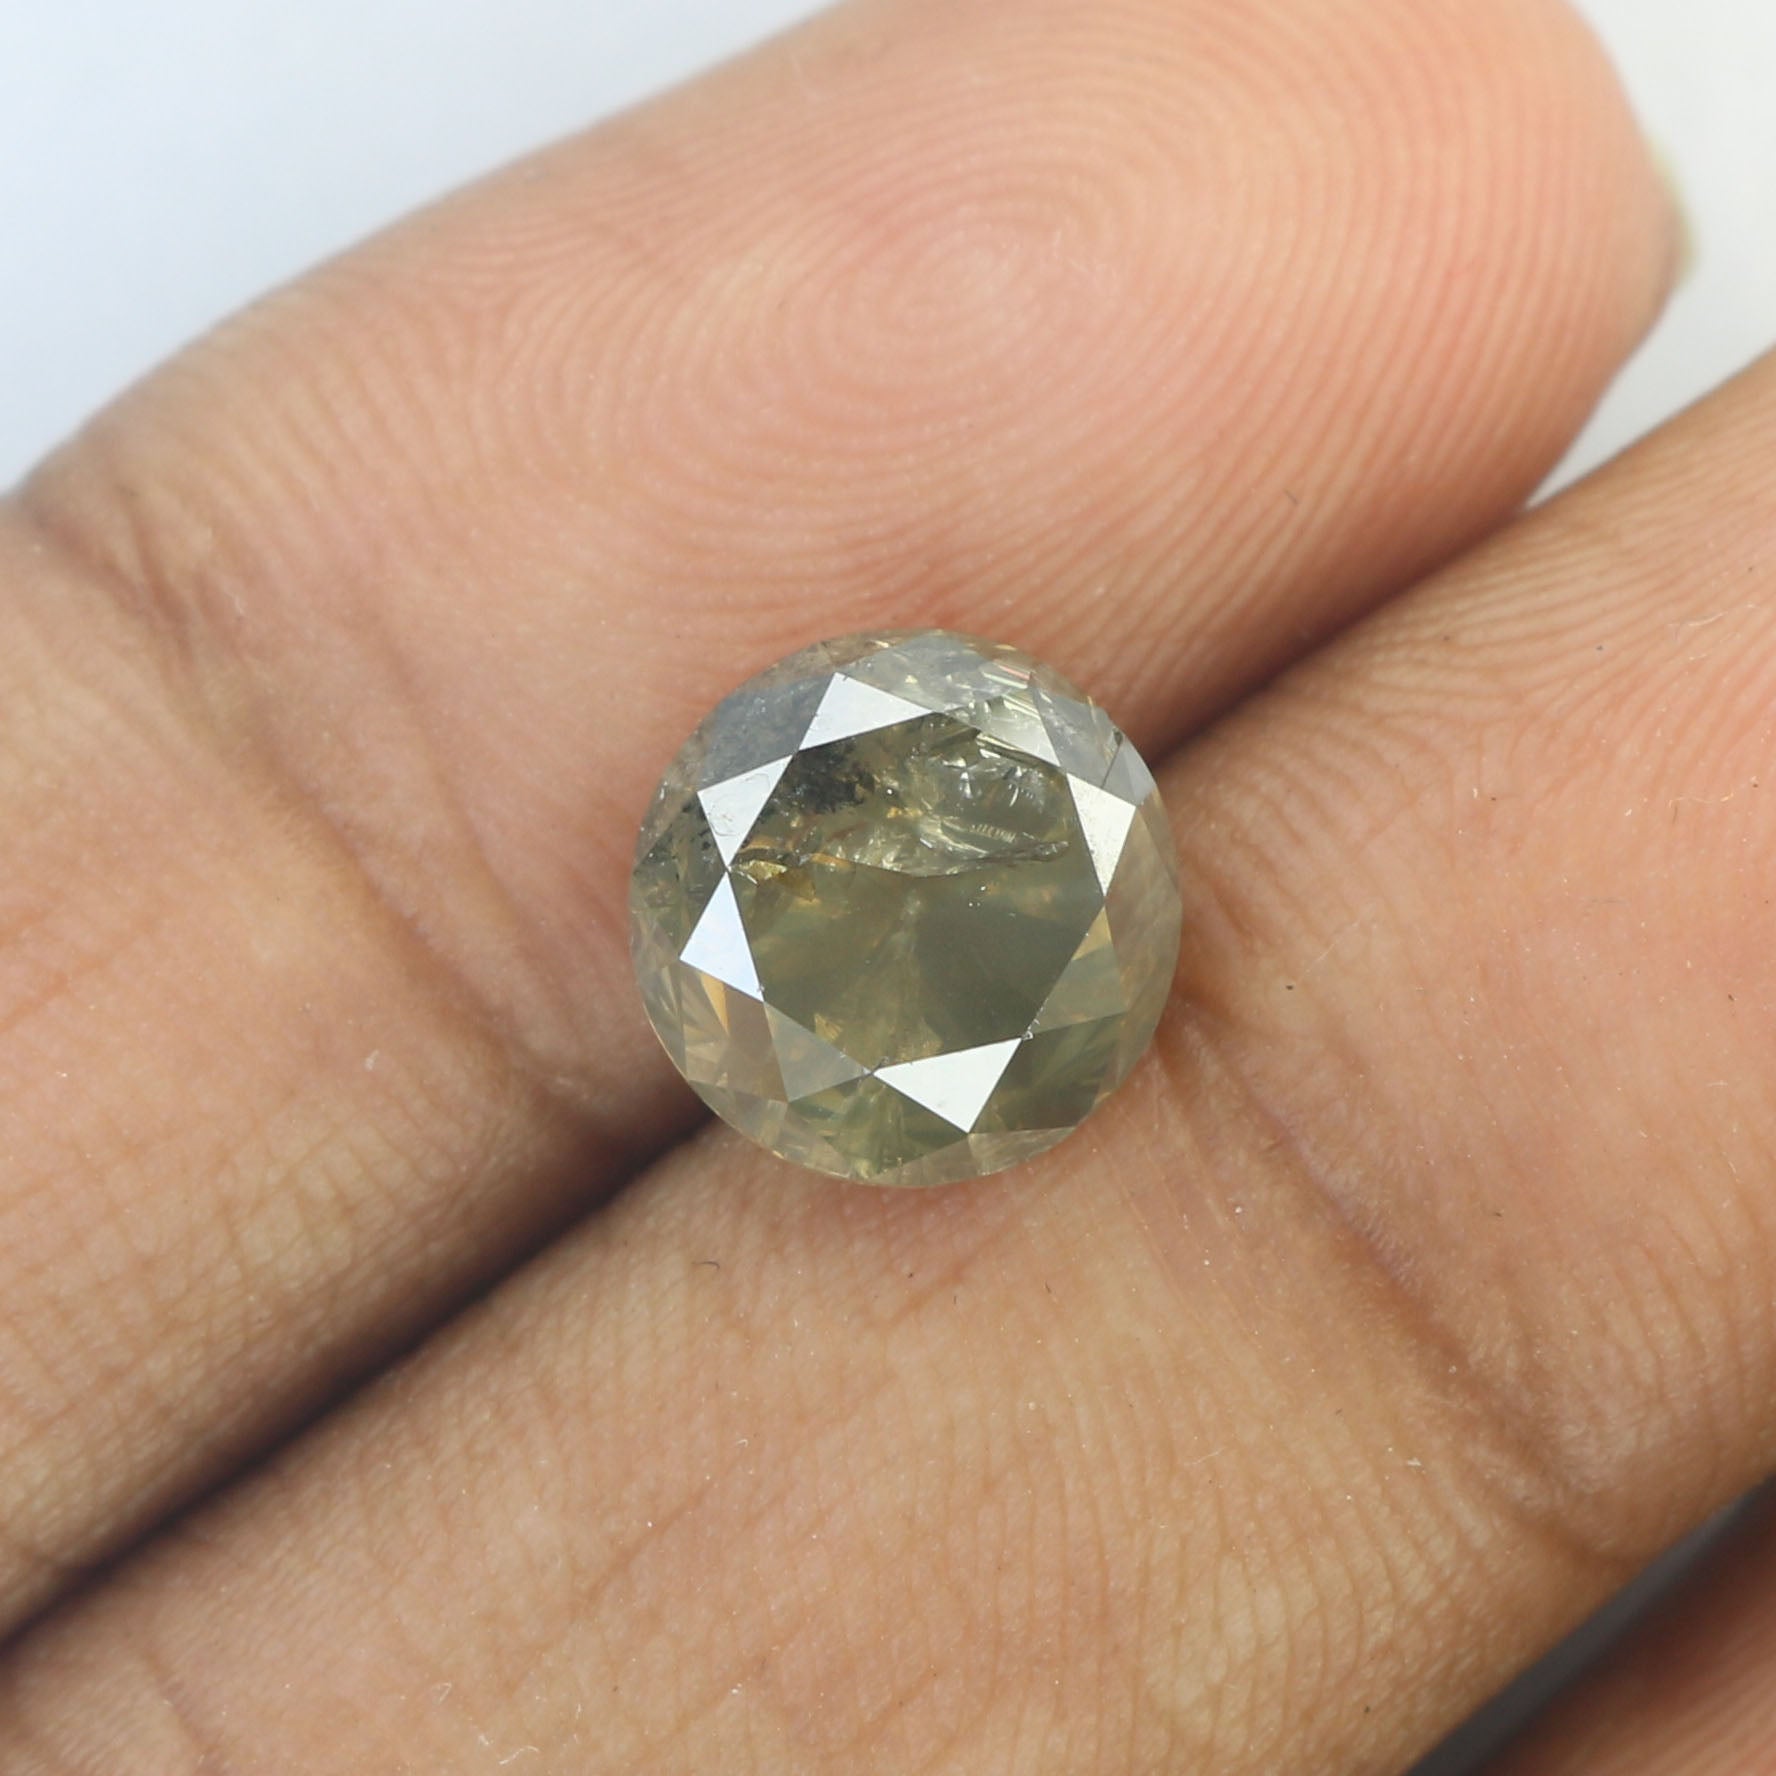 2.84 Ct Natural Loose Round Shape Diamond Black Round Cut Diamond 8.15 MM Natural Loose Diamond Brown Round Brilliant Cut Diamond QL8876